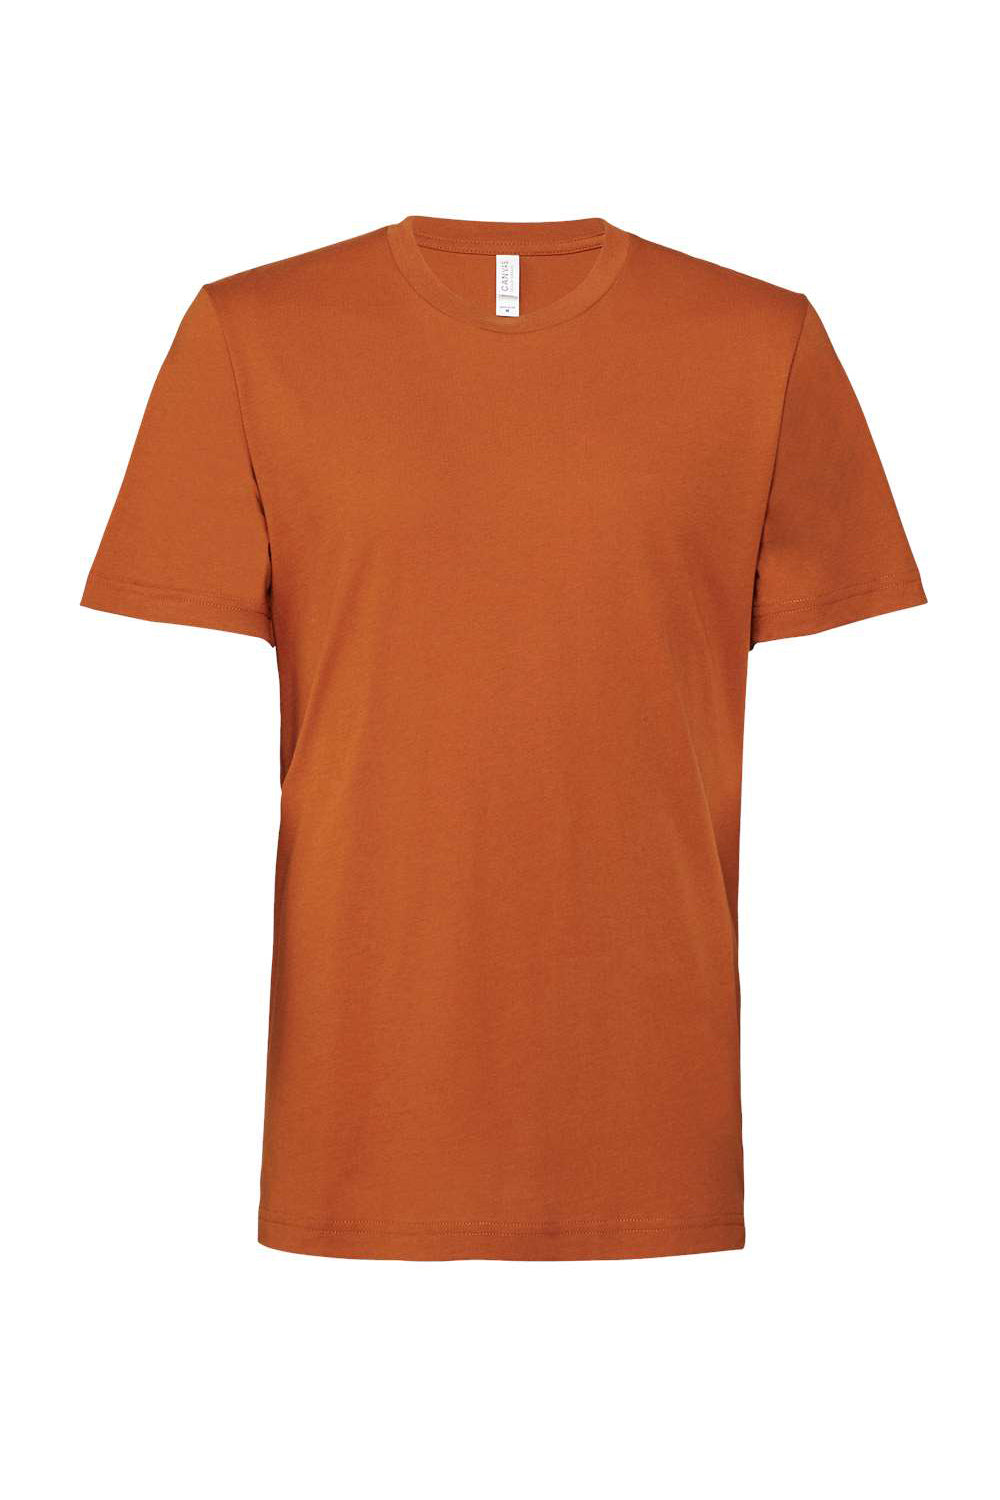 Bella + Canvas BC3001/3001C Mens Jersey Short Sleeve Crewneck T-Shirt Autumn Orange Flat Front